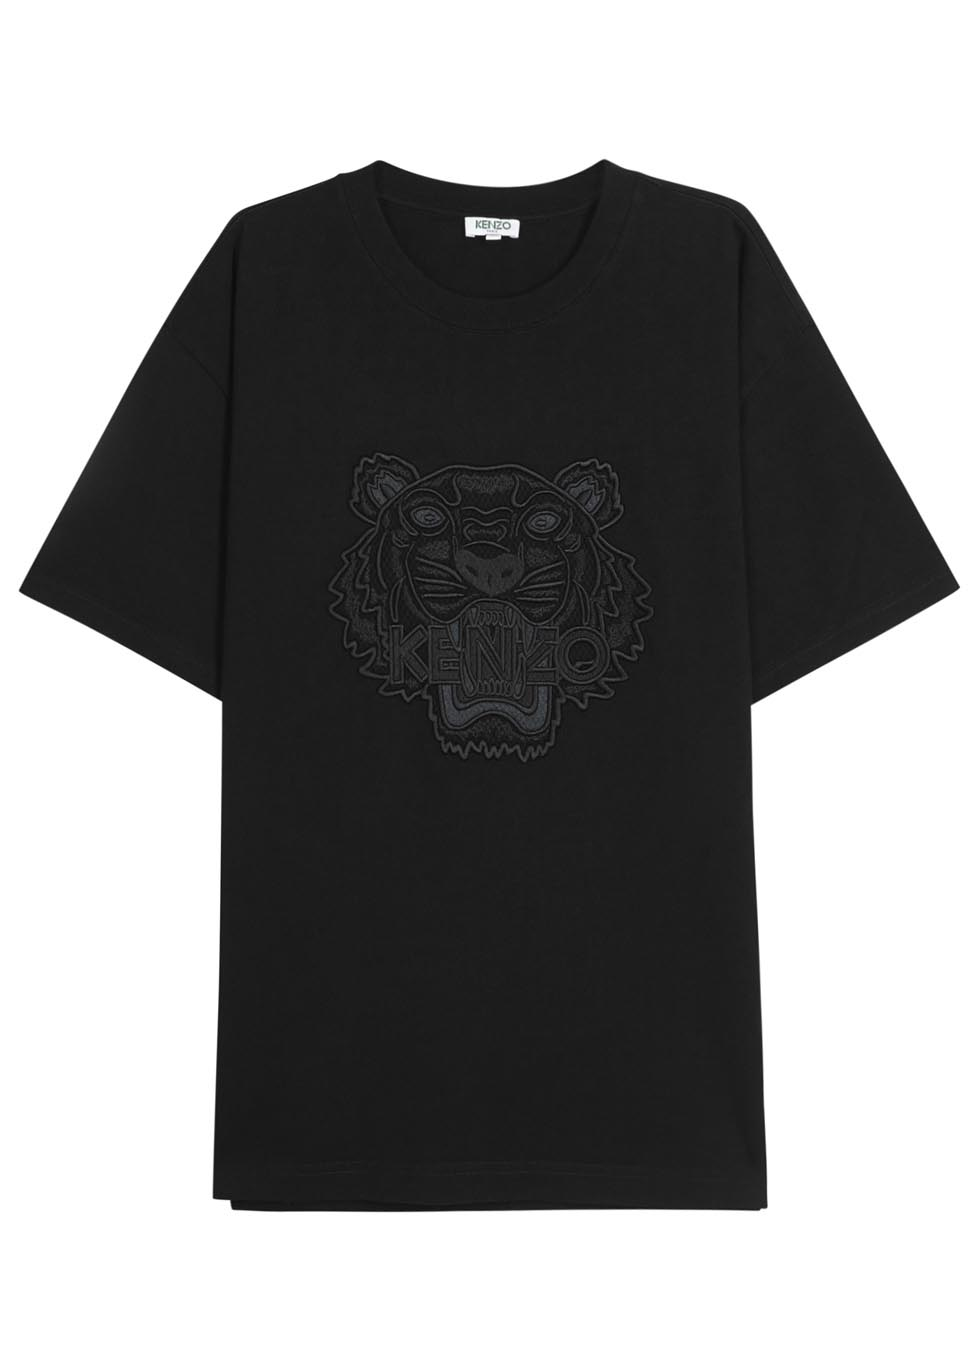 kenzo tiger t shirt black